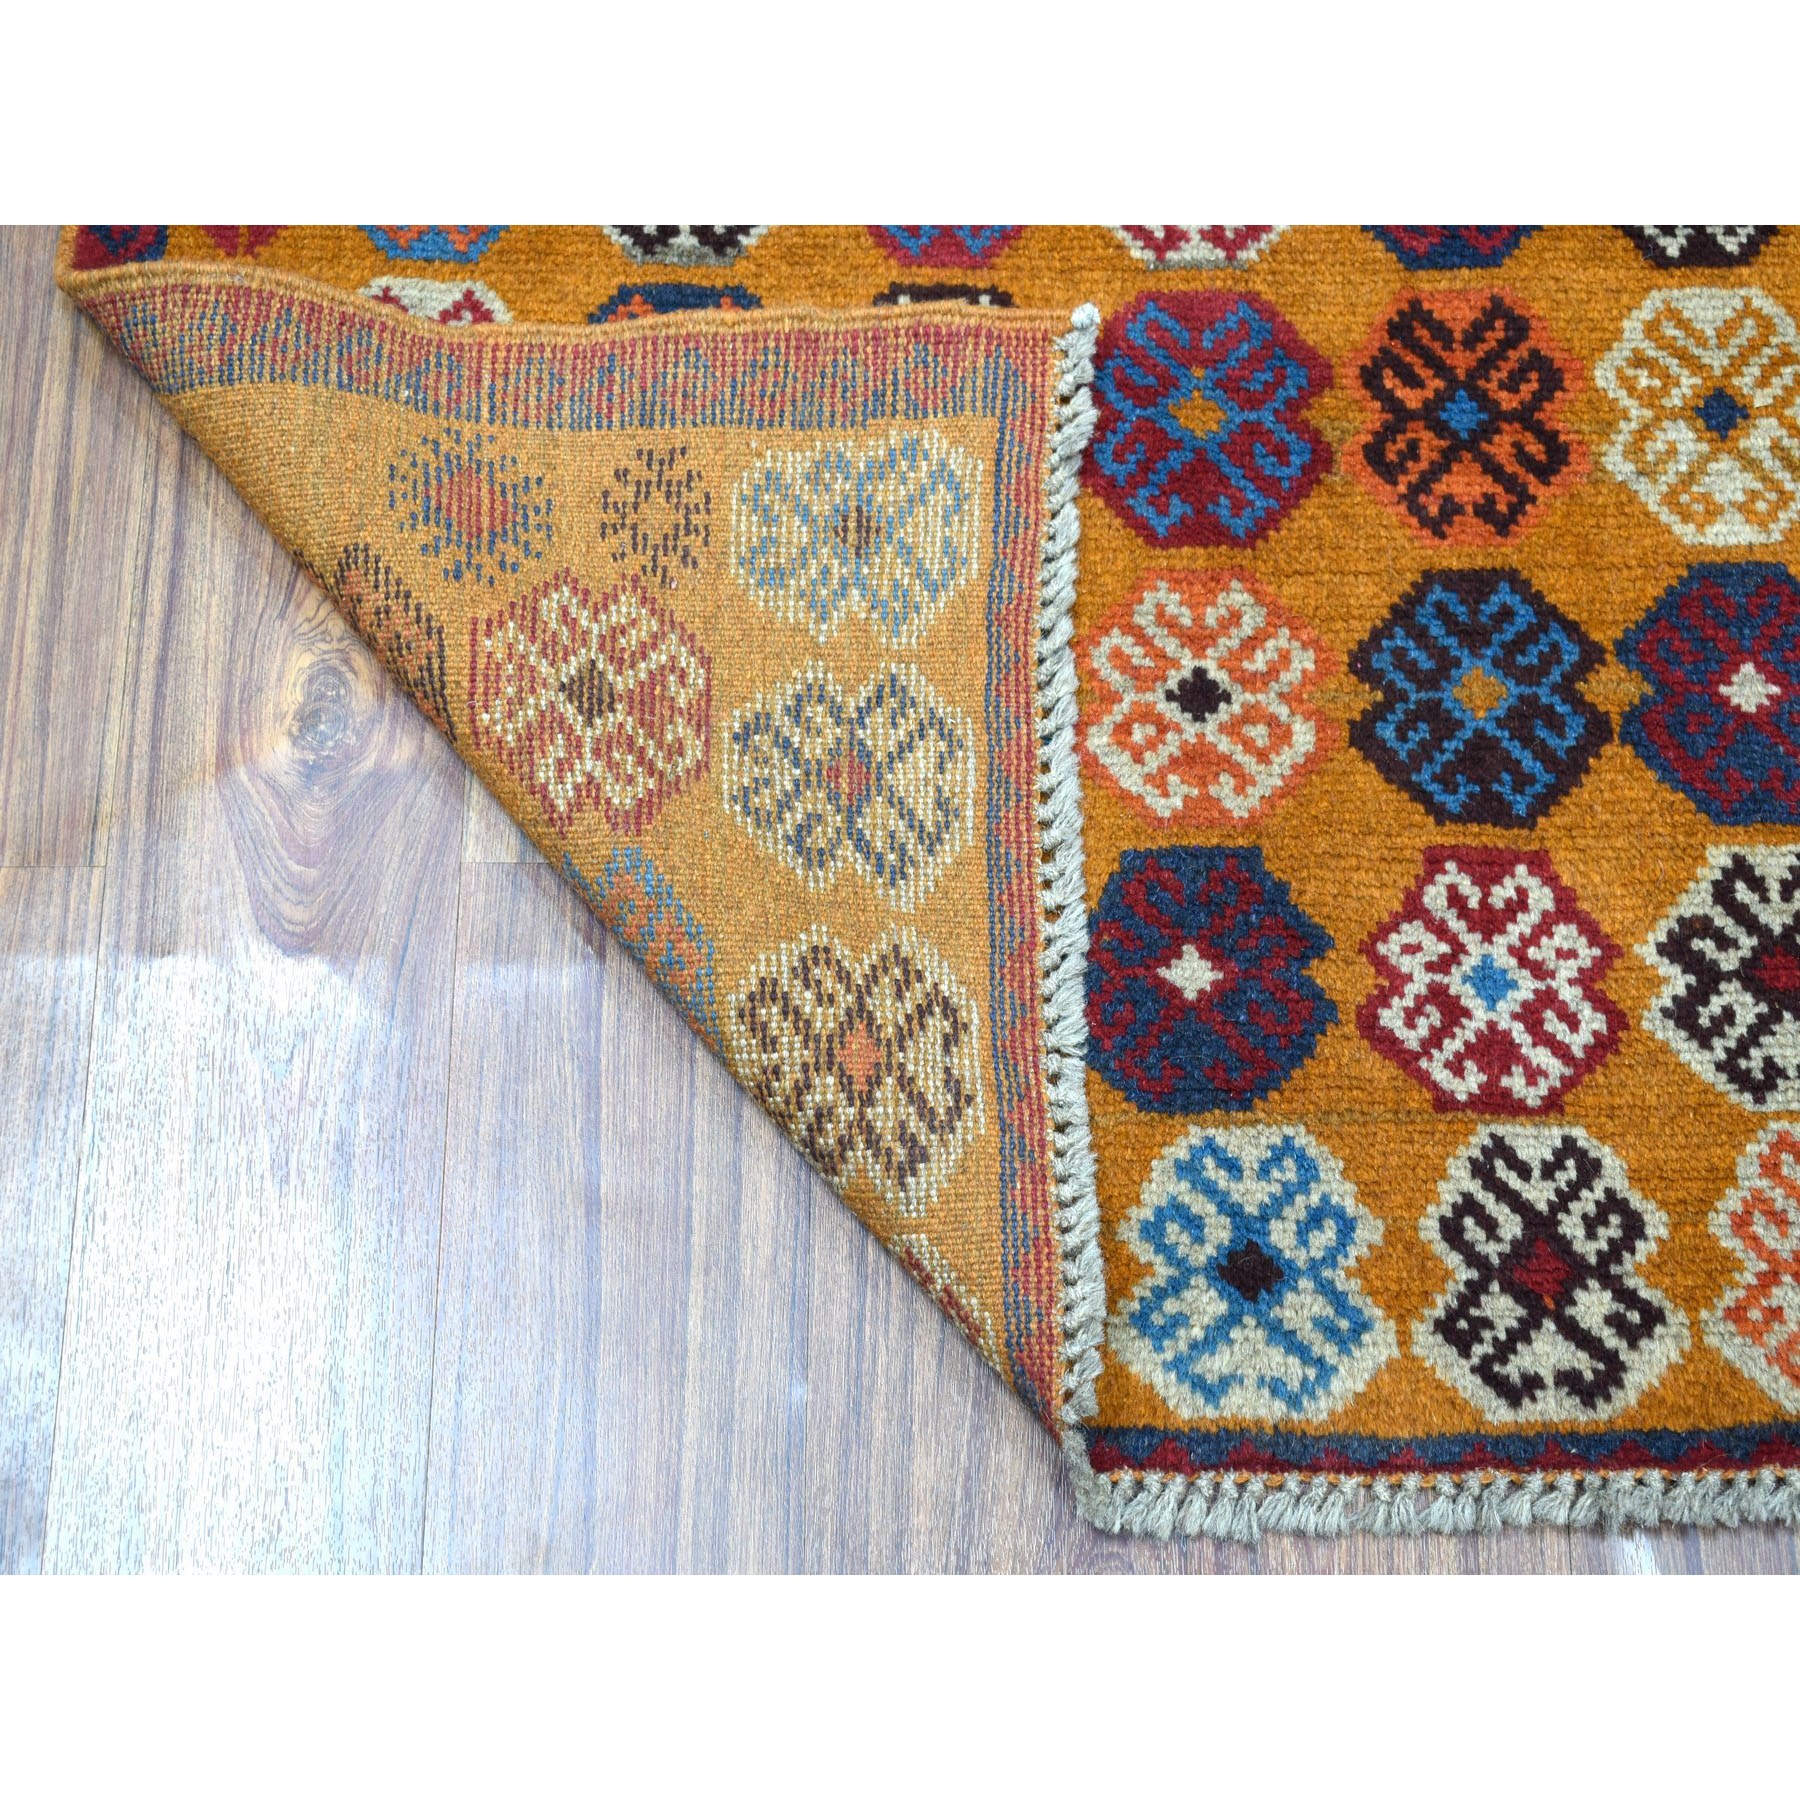 Traditionnel oriental tapis tripolis kirman afghan Bochara hatchlu bleu rouge beige